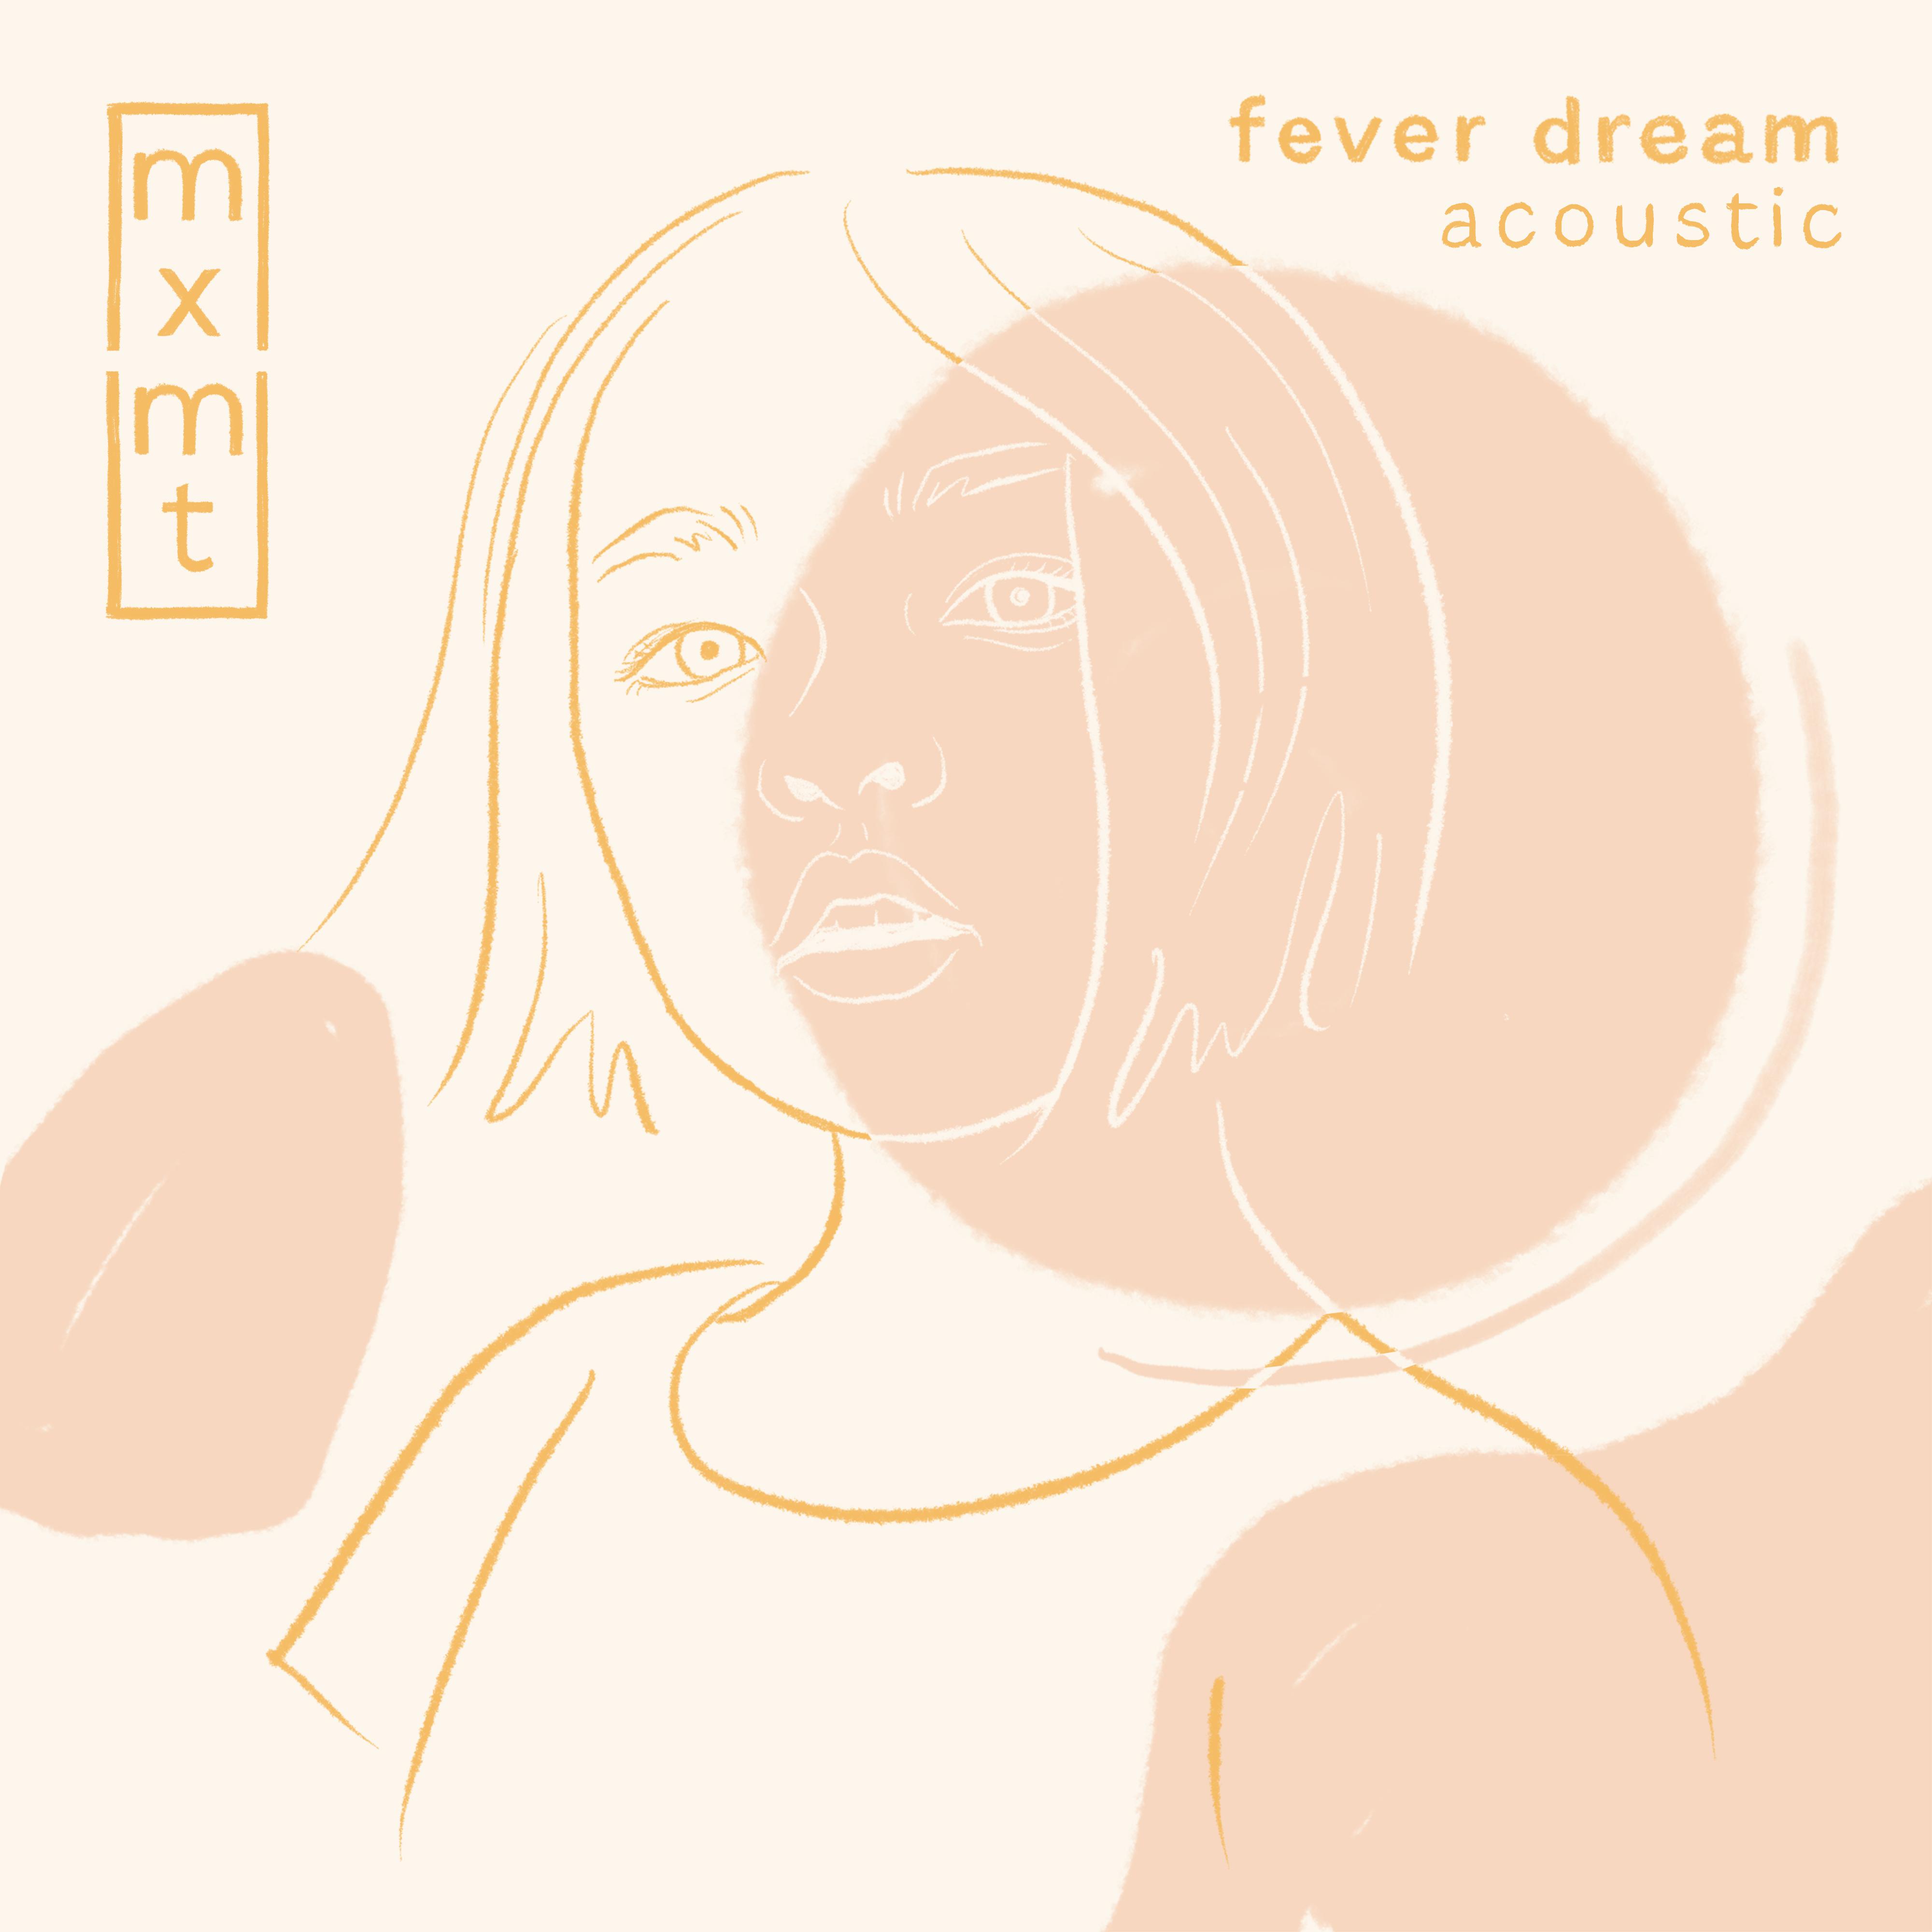 fever dream (acoustic)歌词 歌手mxmtoon-专辑fever dream (acoustic)-单曲《fever dream (acoustic)》LRC歌词下载